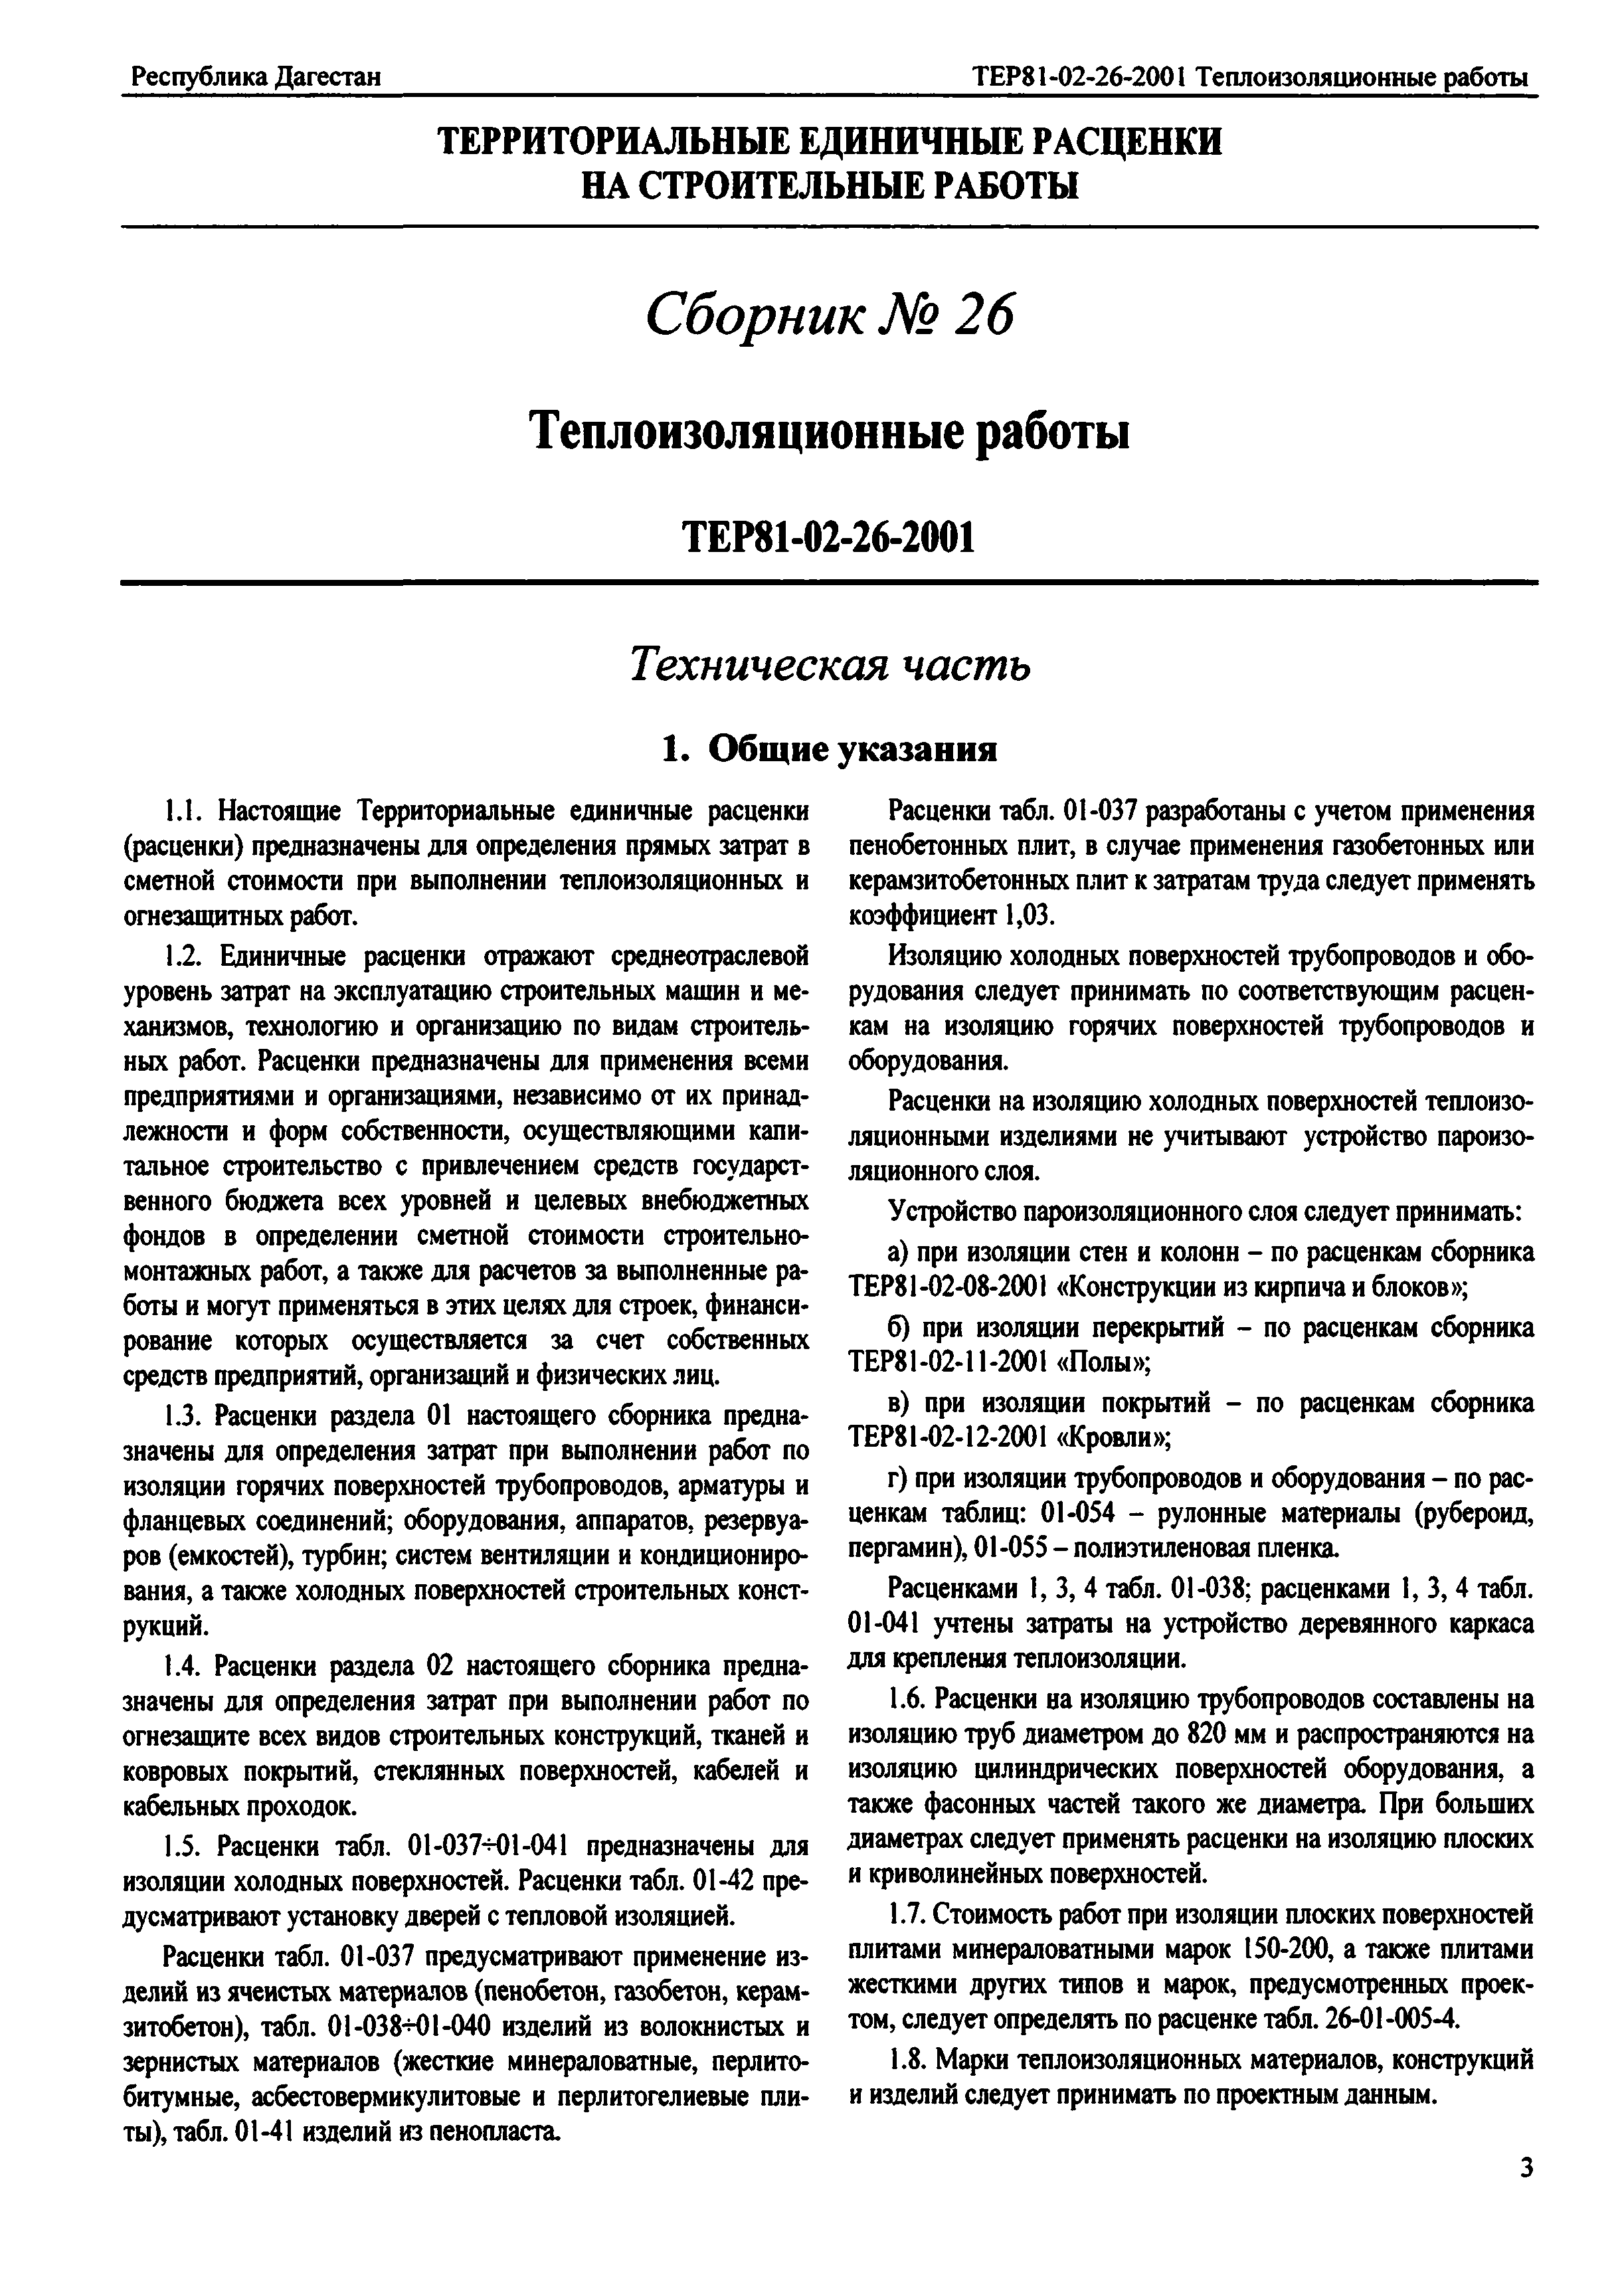 ТЕР Республика Дагестан 2001-26